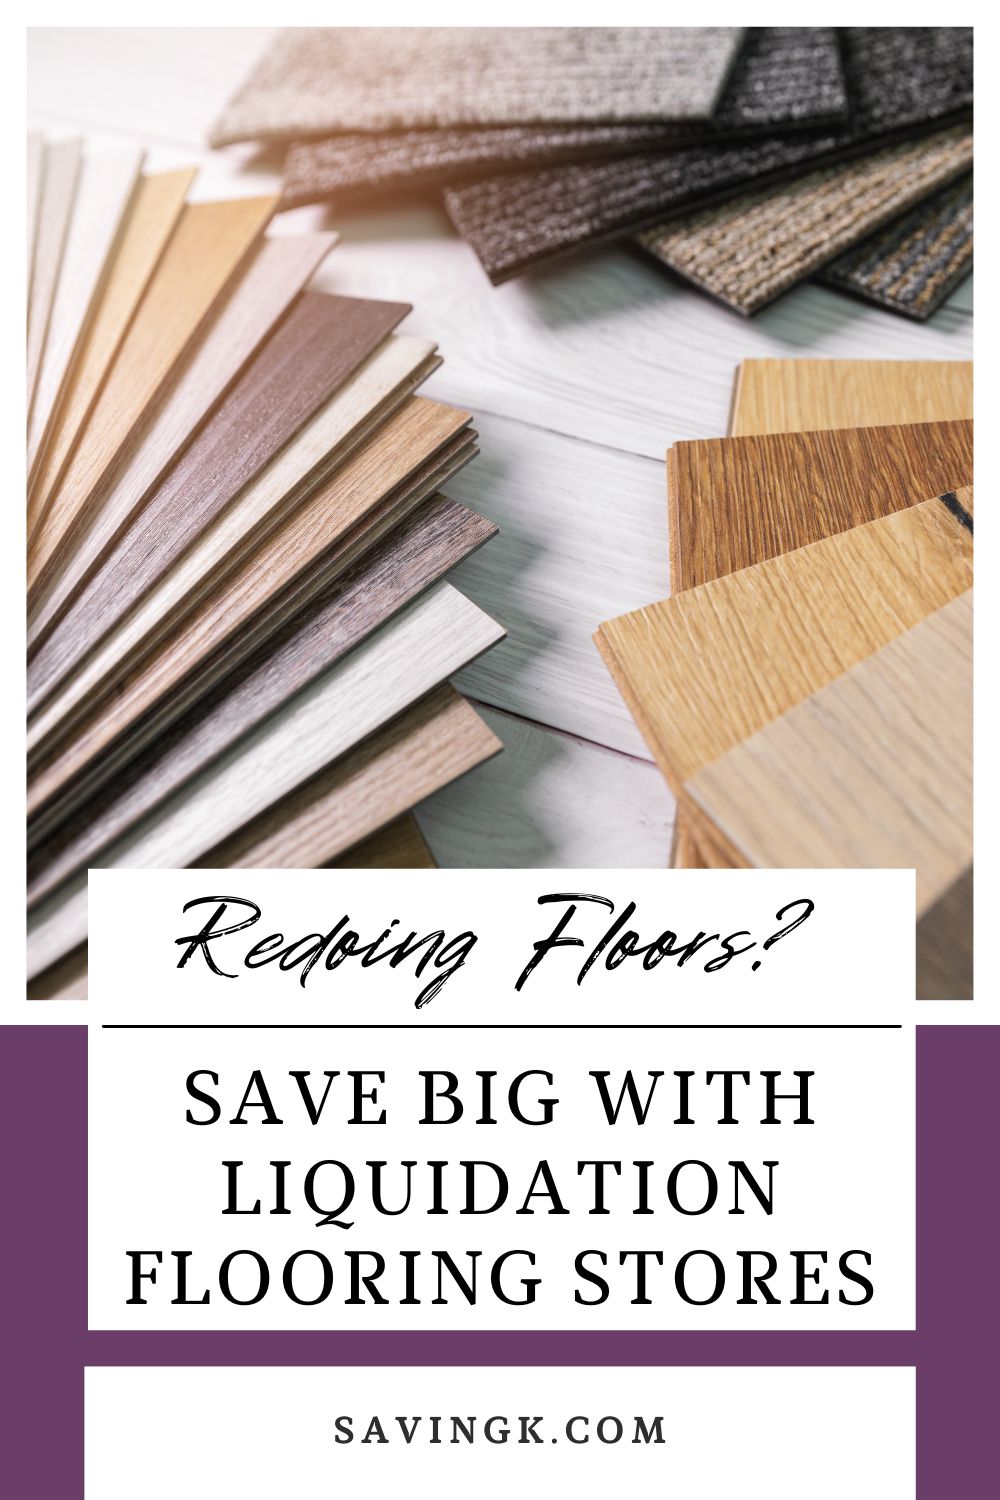 Save Big With Liquidation Flooring